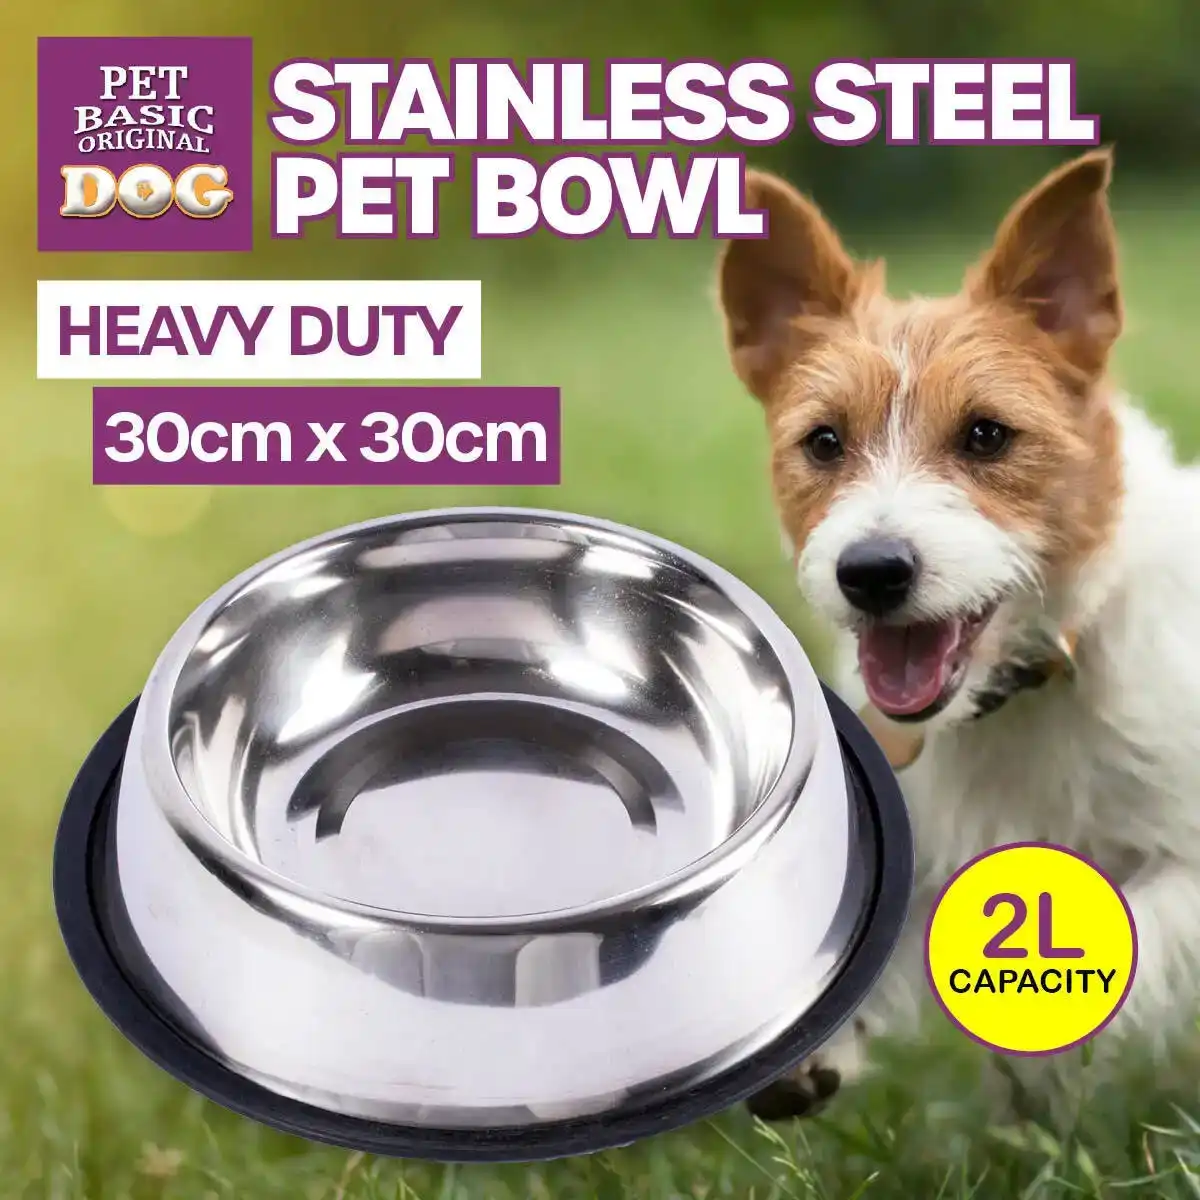 Pet Basic® Stainless Steel Large Pet Bowl 2L Capacity Non Slip Base 30 x 30cm